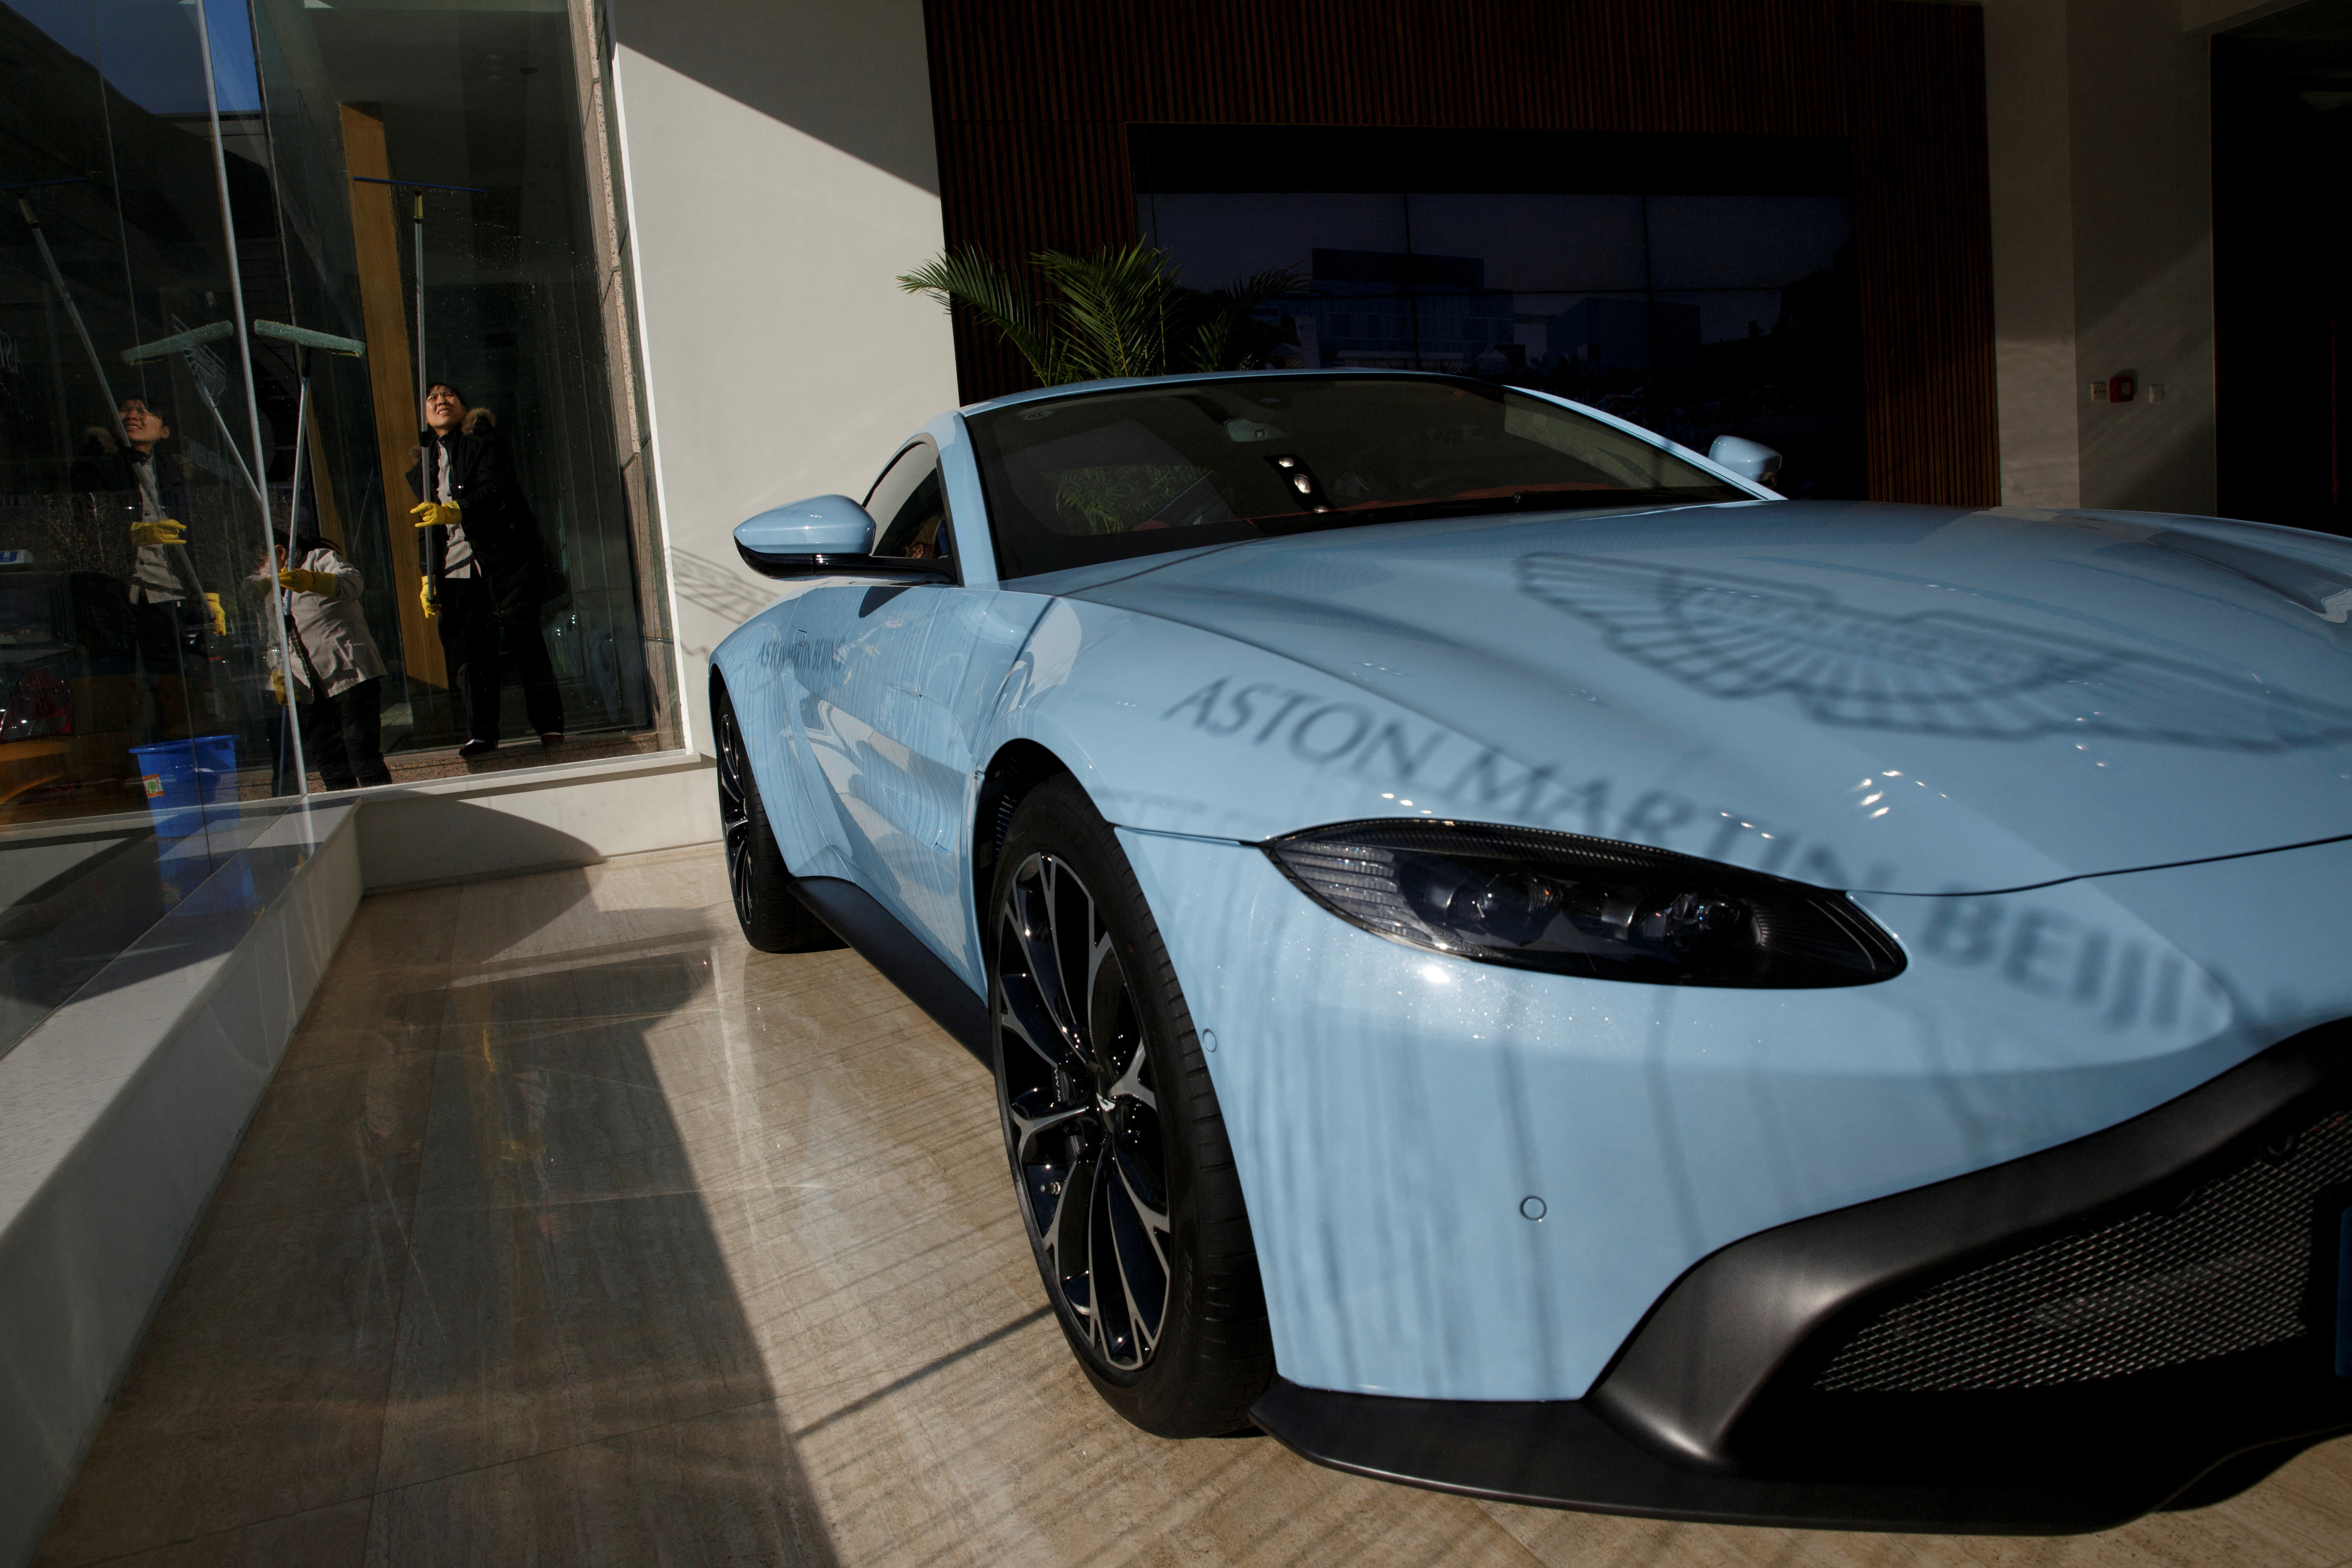 Aston Martin cuts volume target as new sports car hits production snag